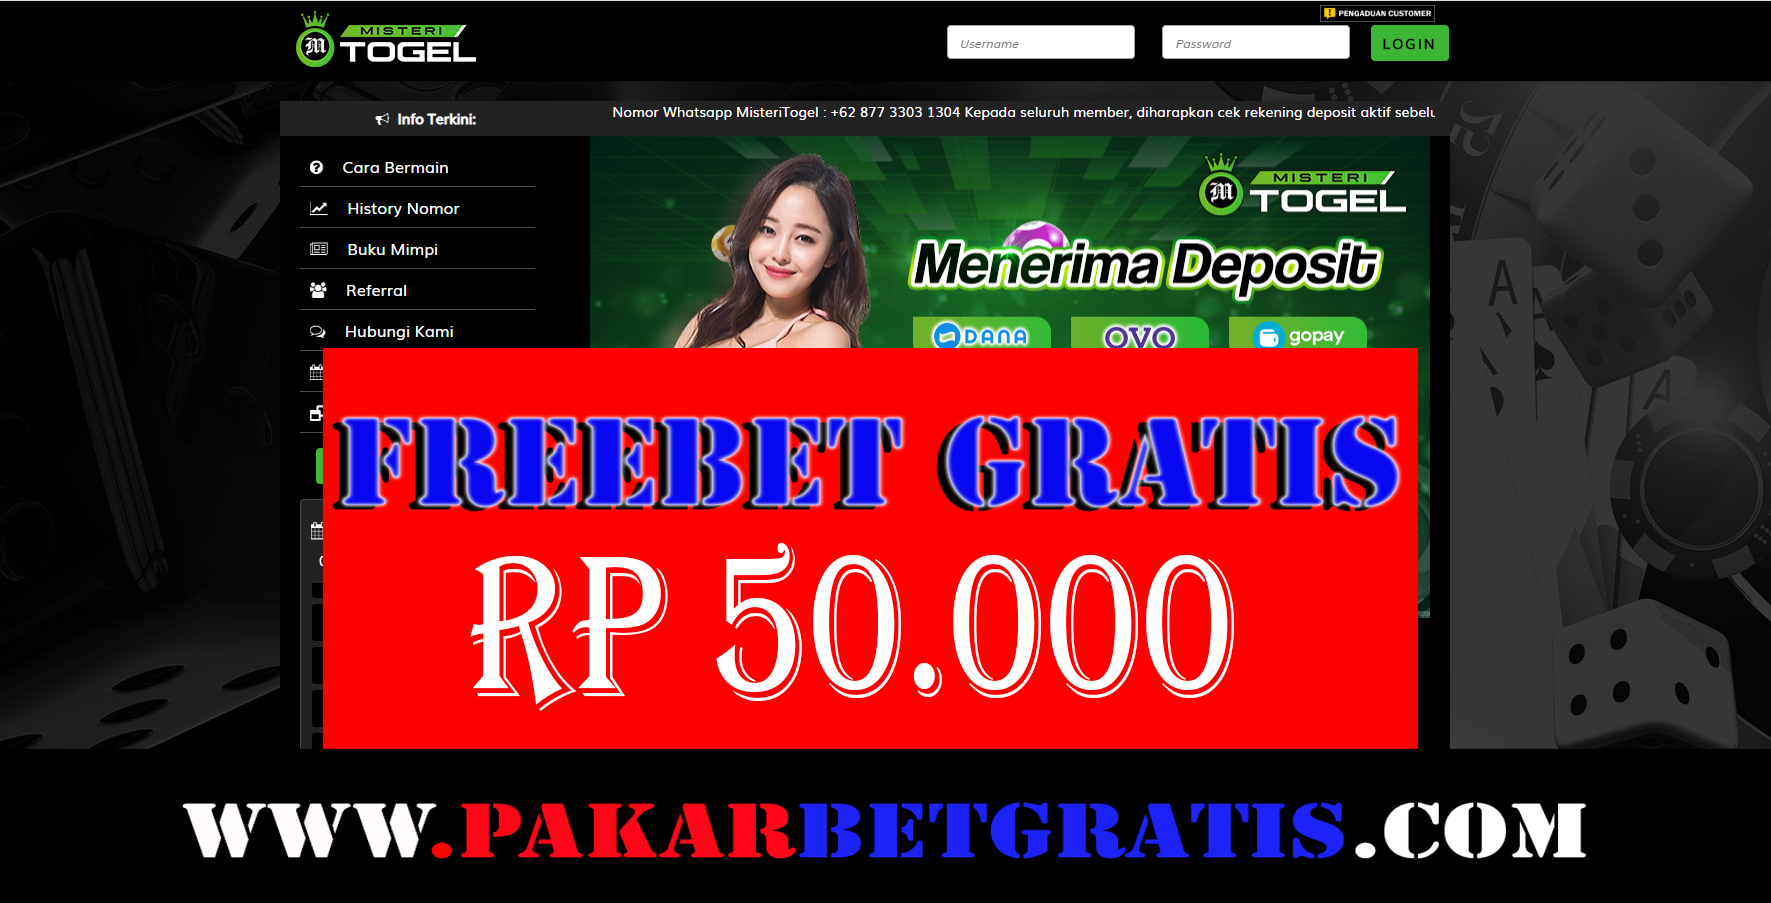 Freebet Gratis misteritogel Rp 50.000